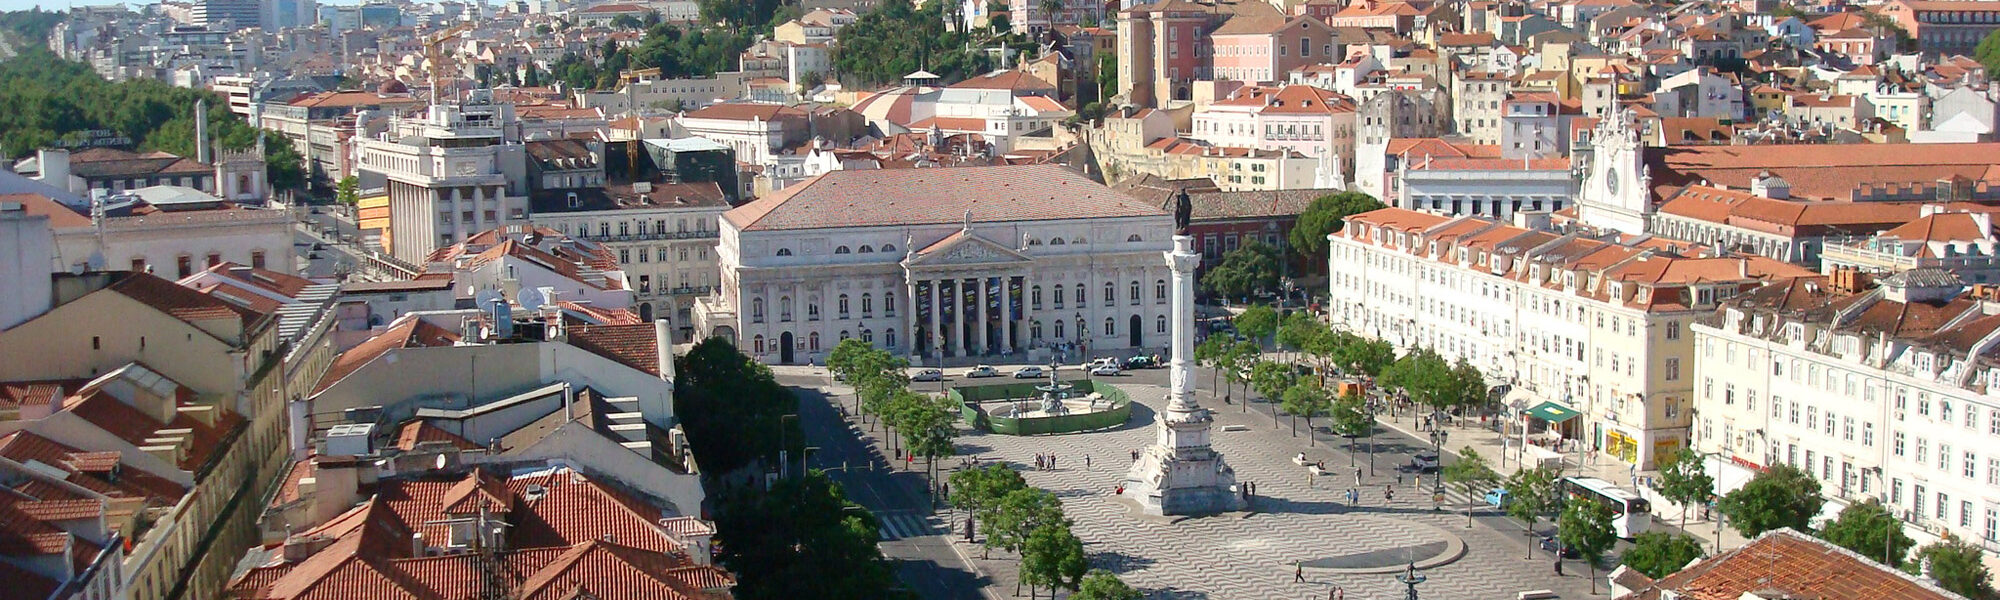 Rossio - Lissabon - Portugal